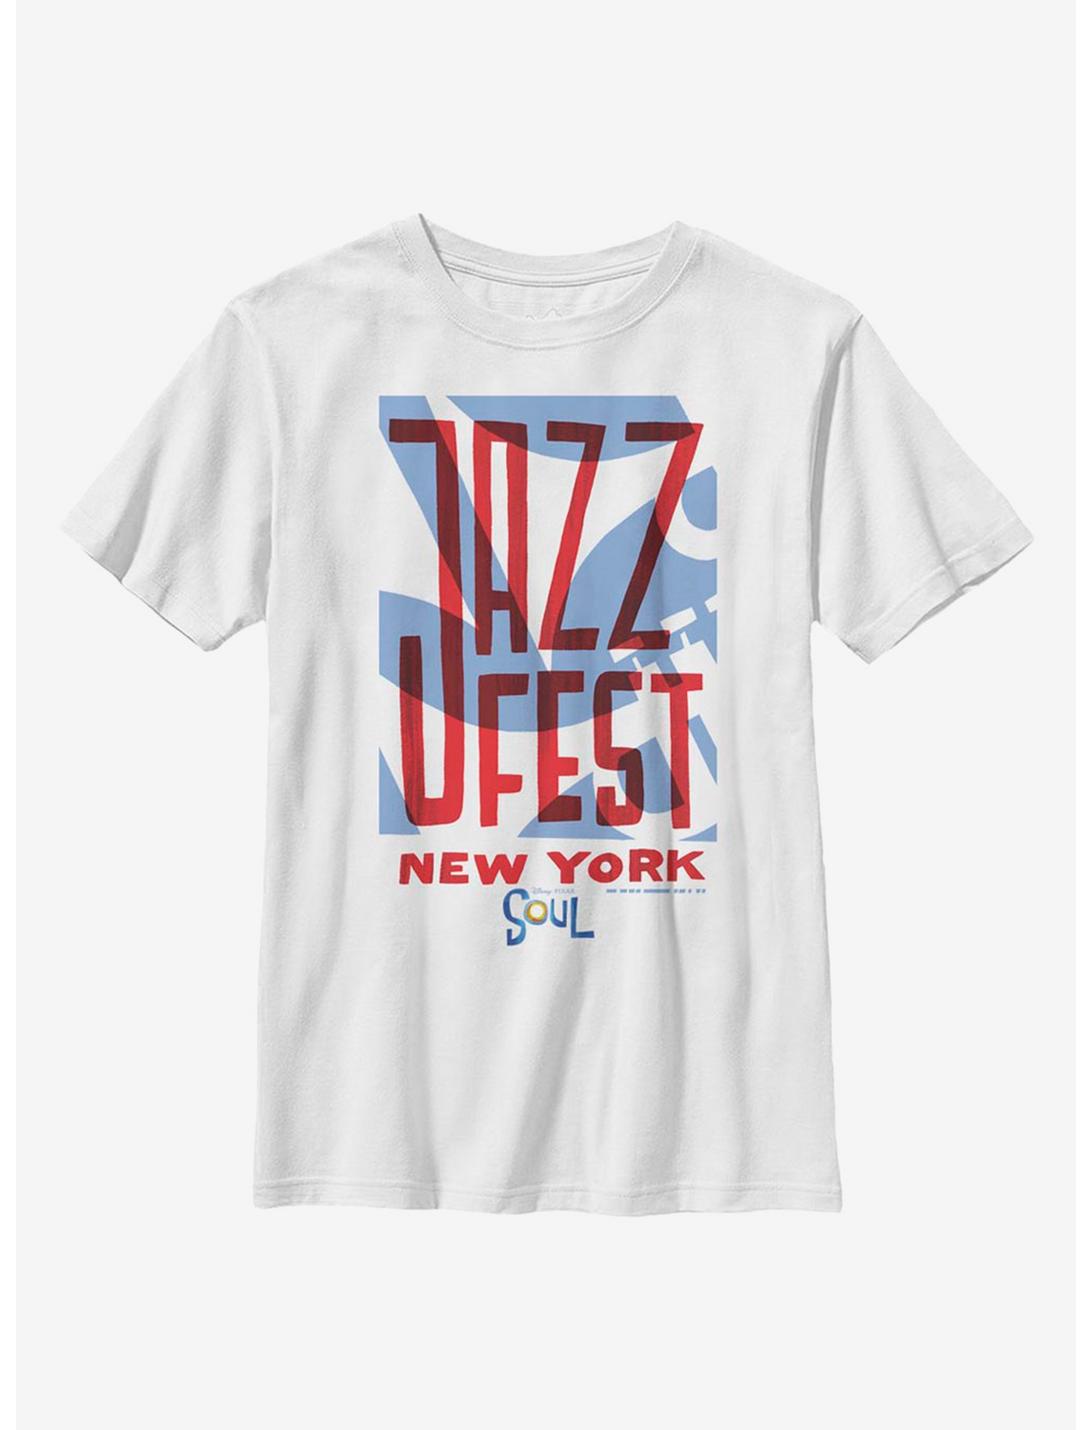 Disney Pixar Soul Jazz Fest Youth T-Shirt, WHITE, hi-res